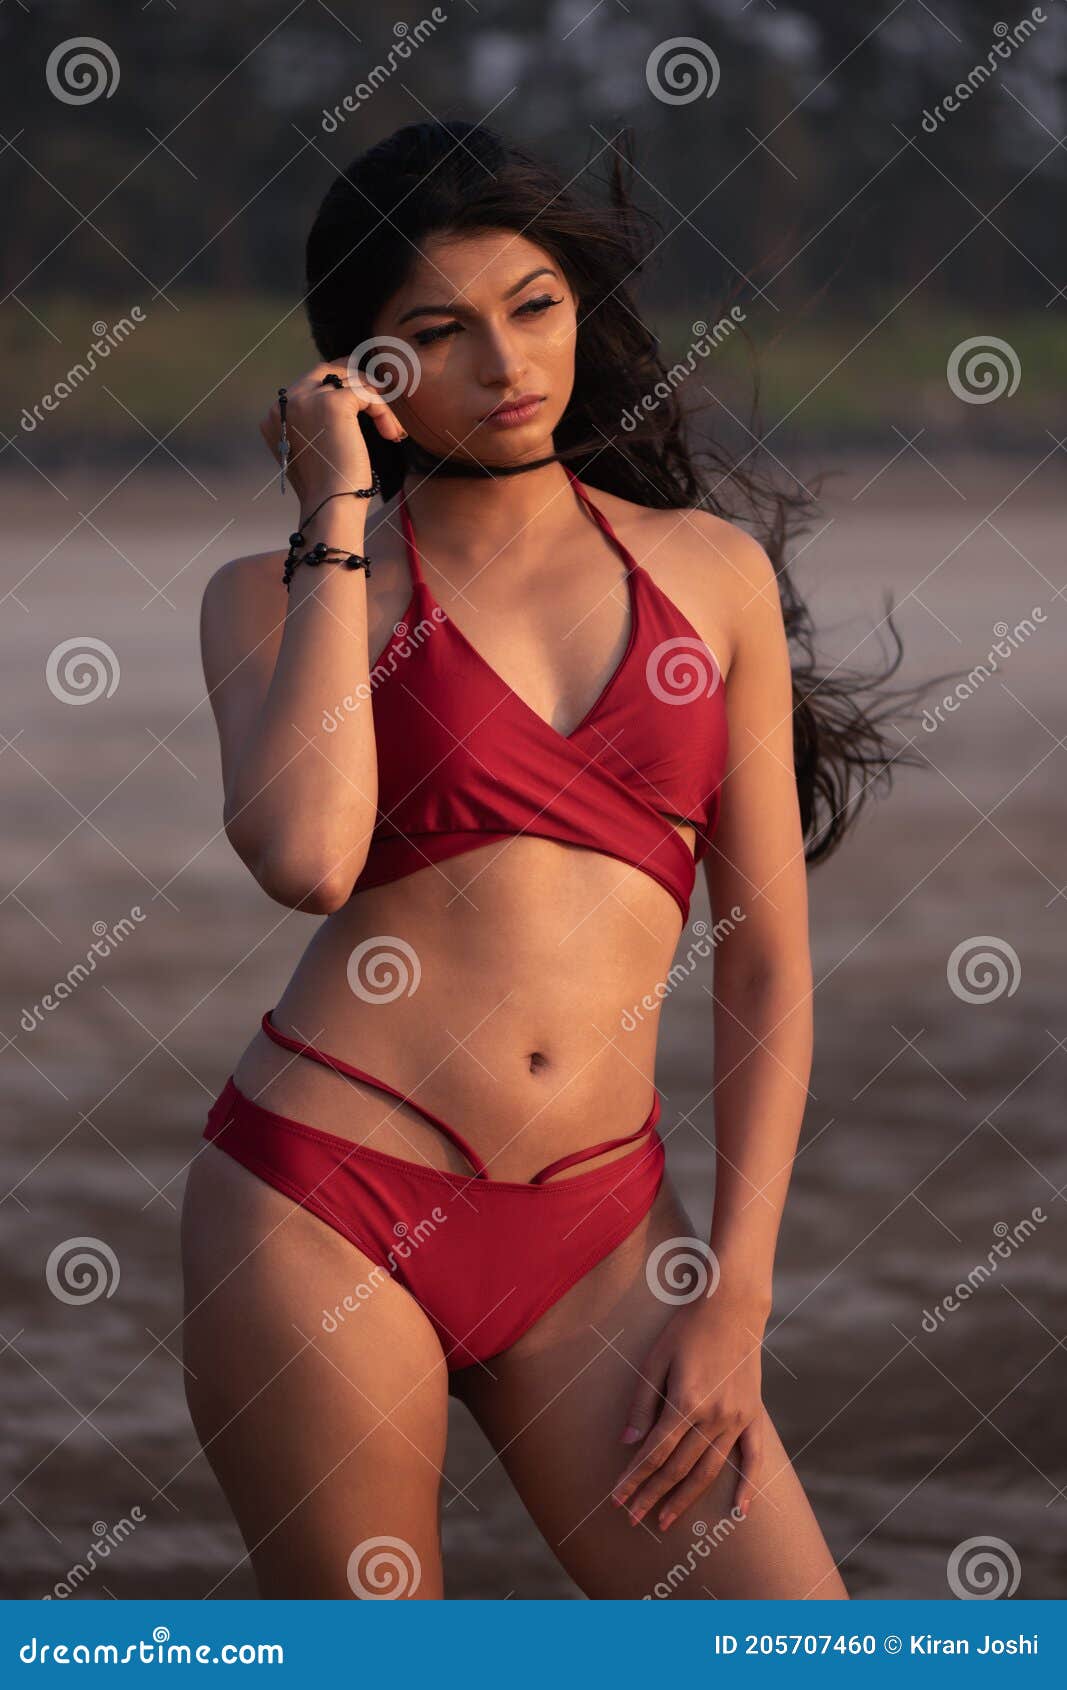 Koloniaal Blanco mineraal Young Indian Girl in Red Bikini Enjoying Her Vacation on Beach and Relaxing  on Beach Stock Photo - Image of enjoying, girl: 205707460